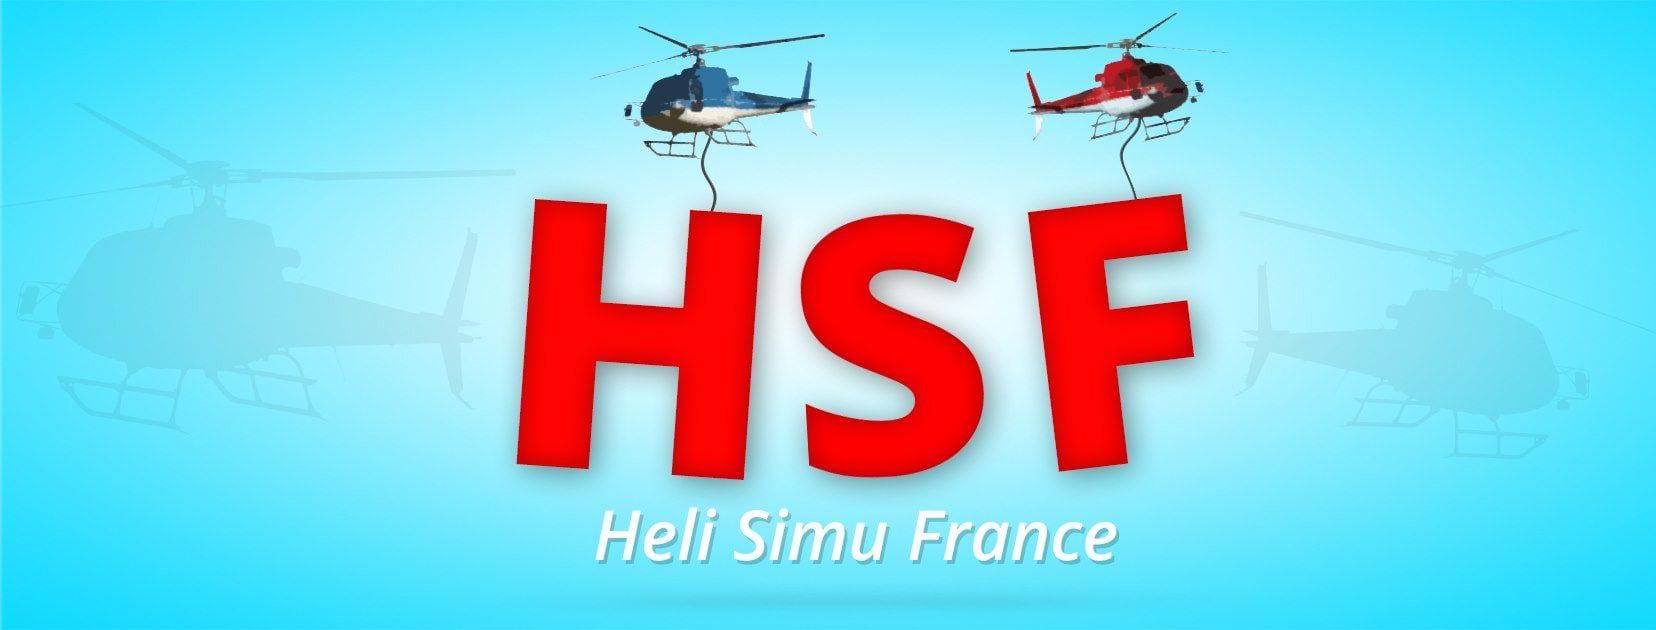 HeliSimu France